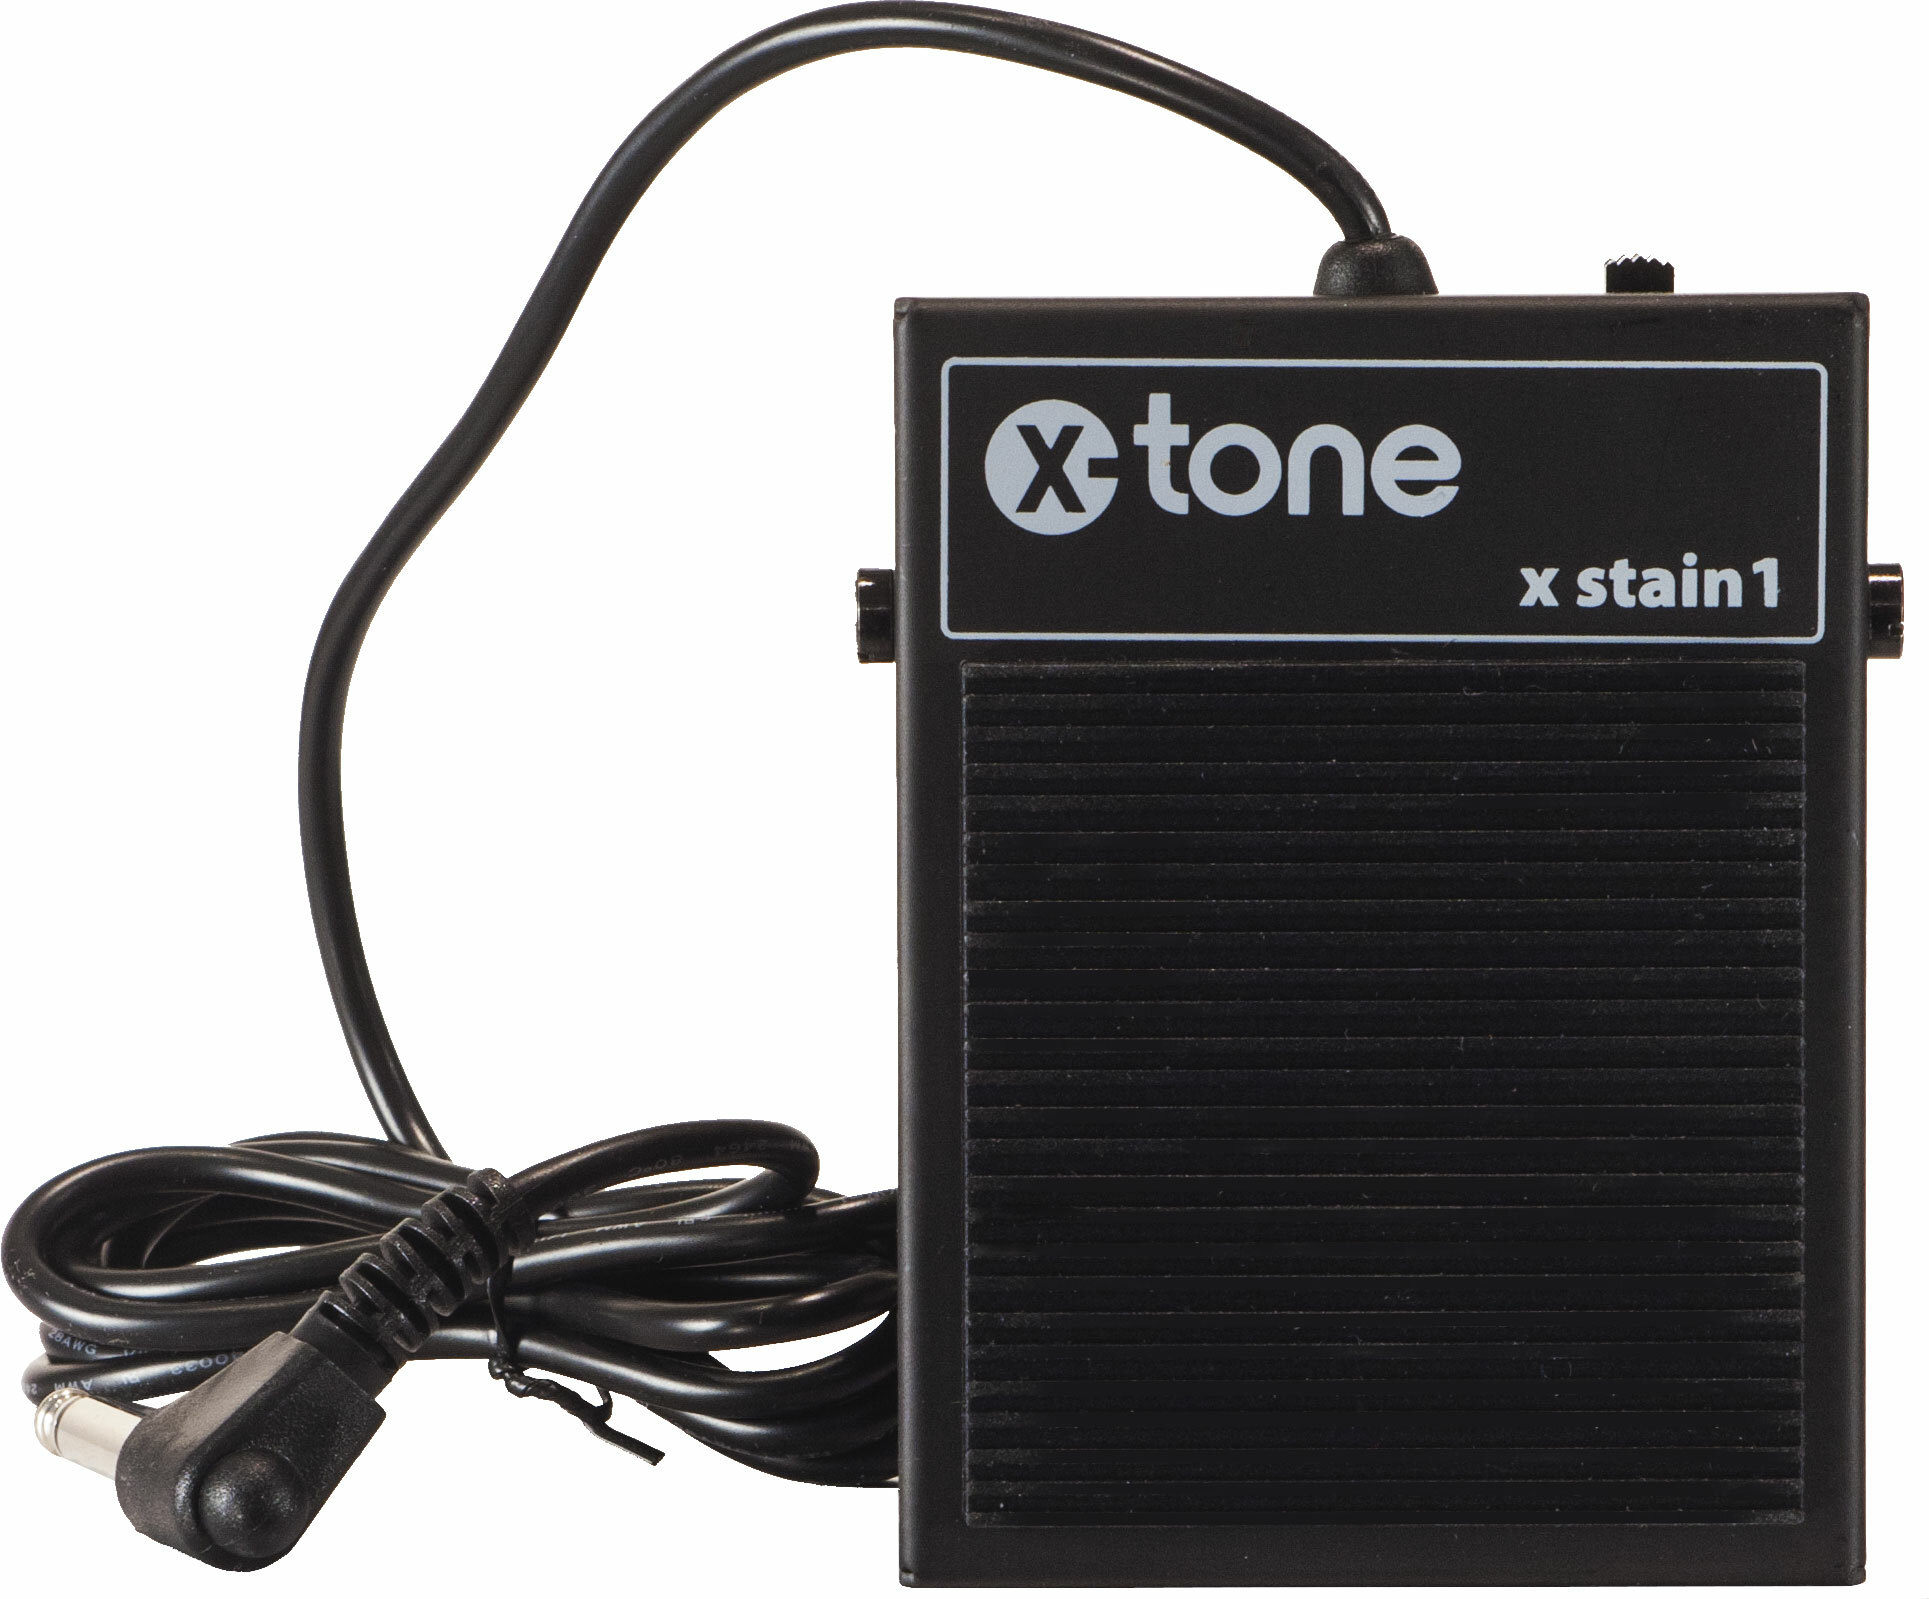 X-tone X-stain 1 Pedale Sustain - Pedal de sustain para teclado - Main picture